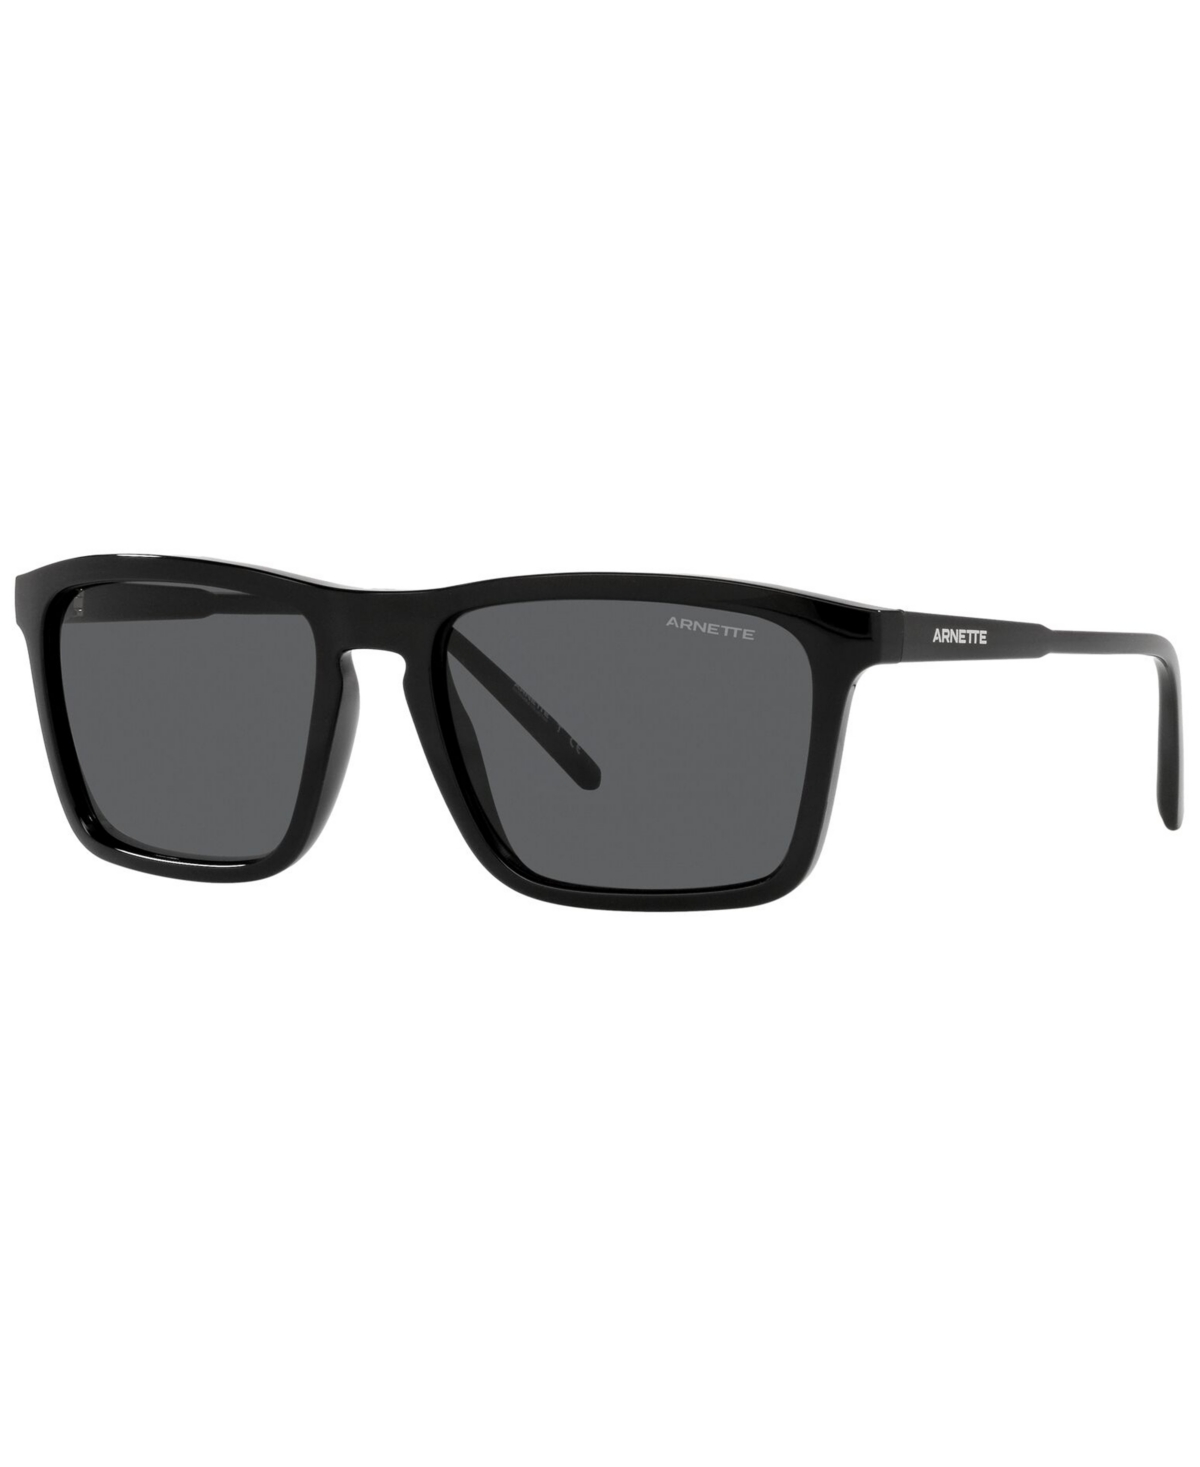 Men's Sunglasses, AN4283 56 - BLACK/DARK GREY